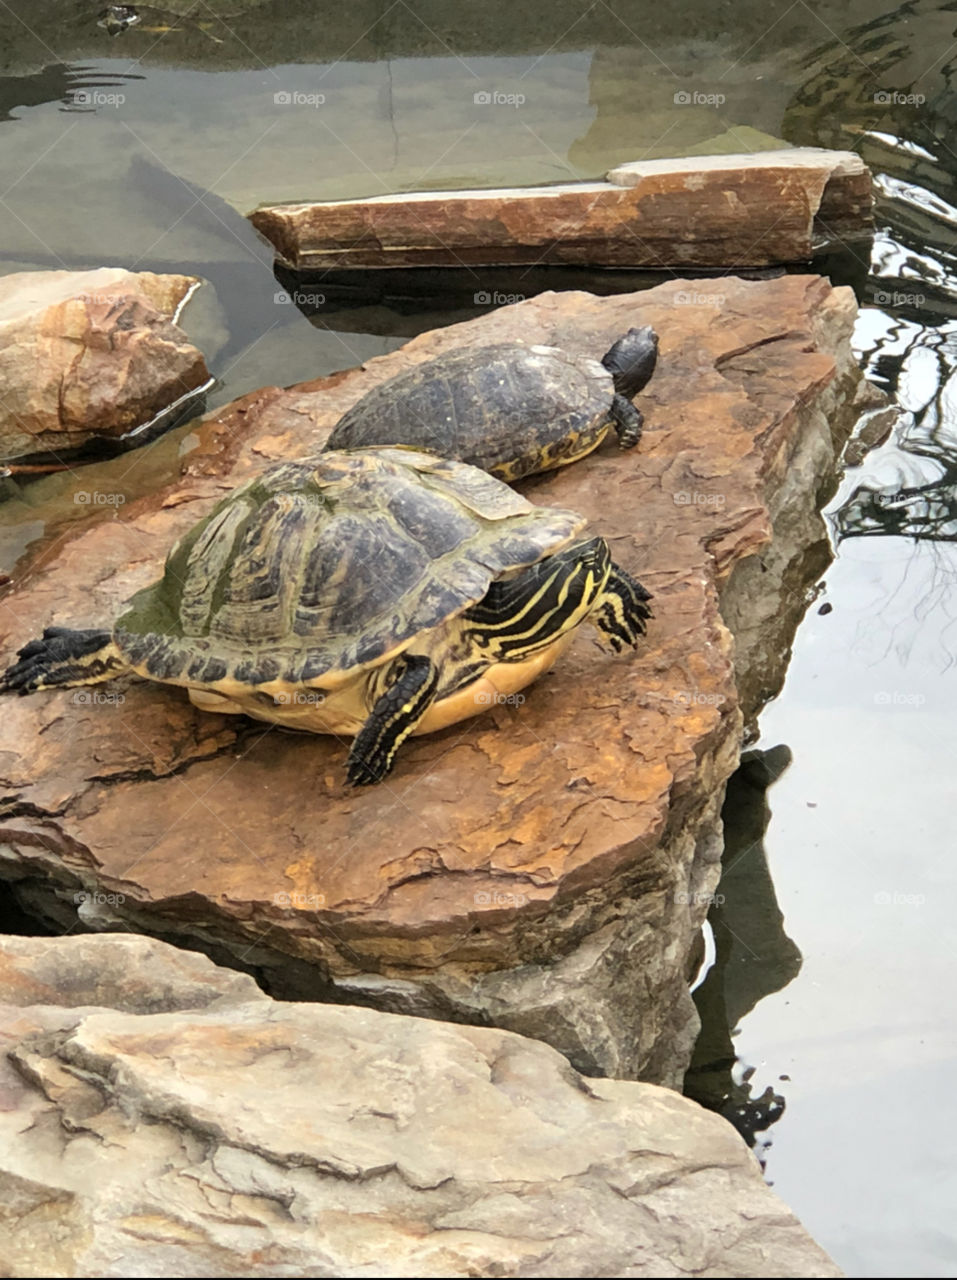 Sunbathing turtles in a rock